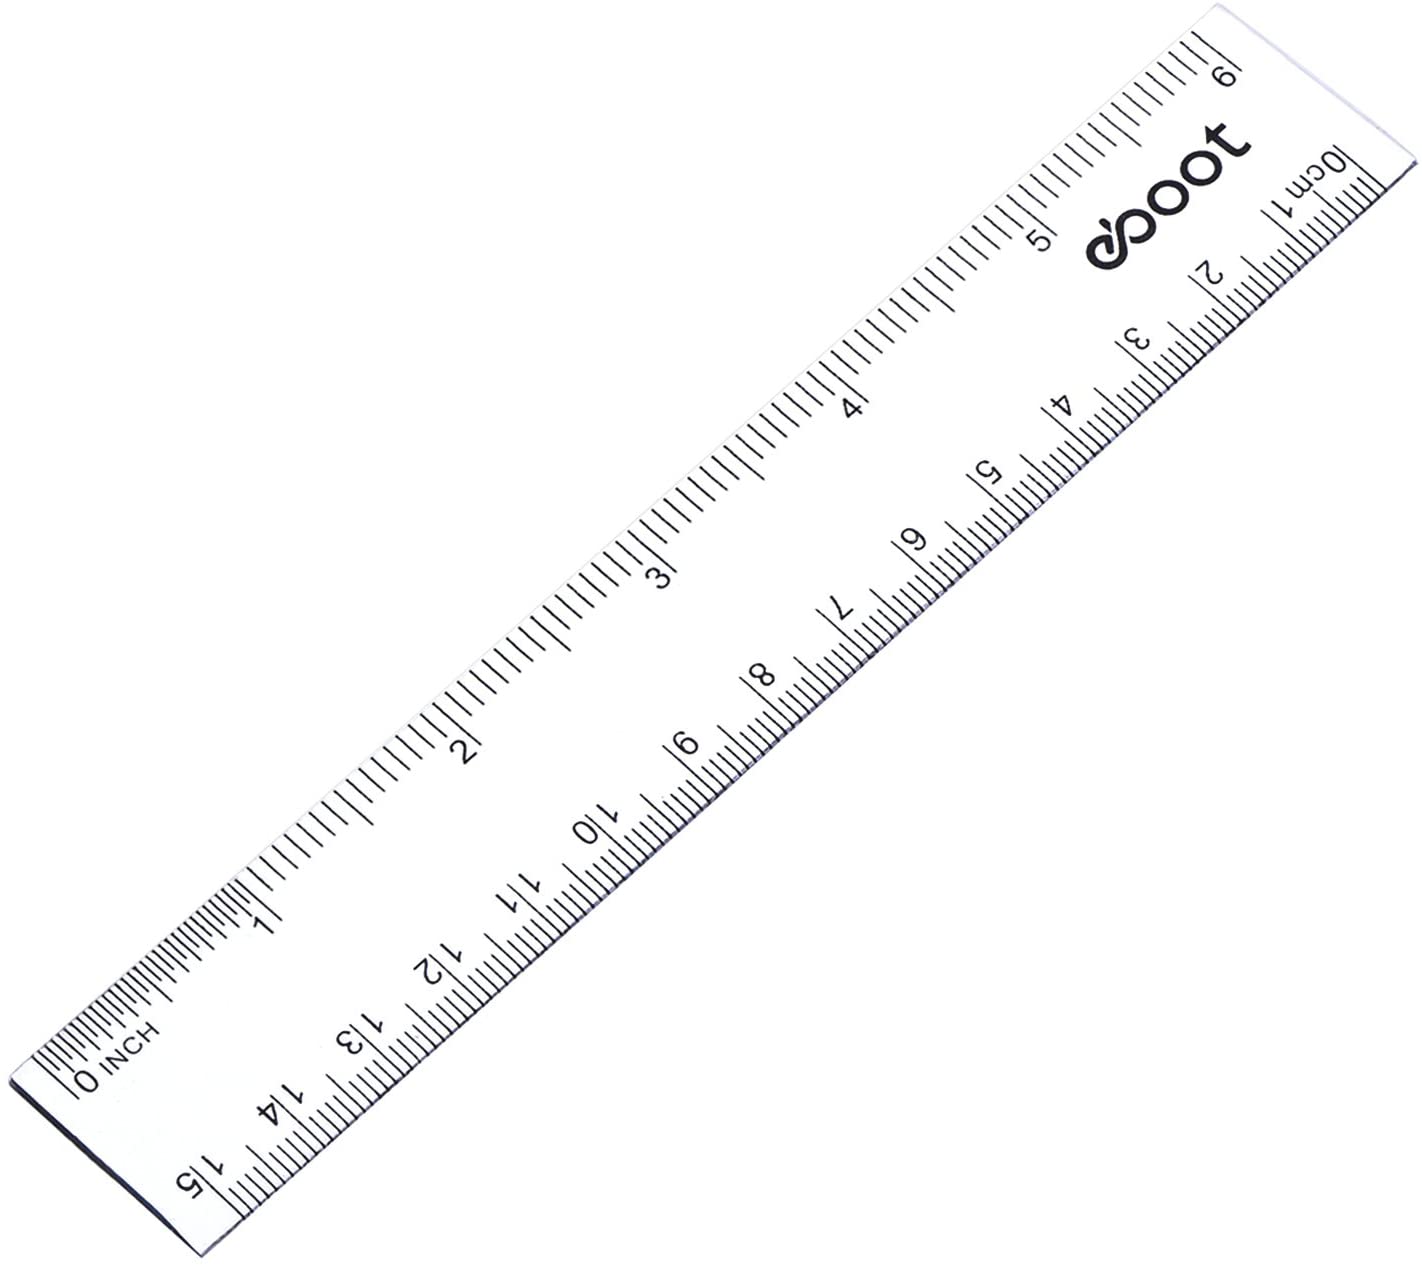 Ruler measurement chart